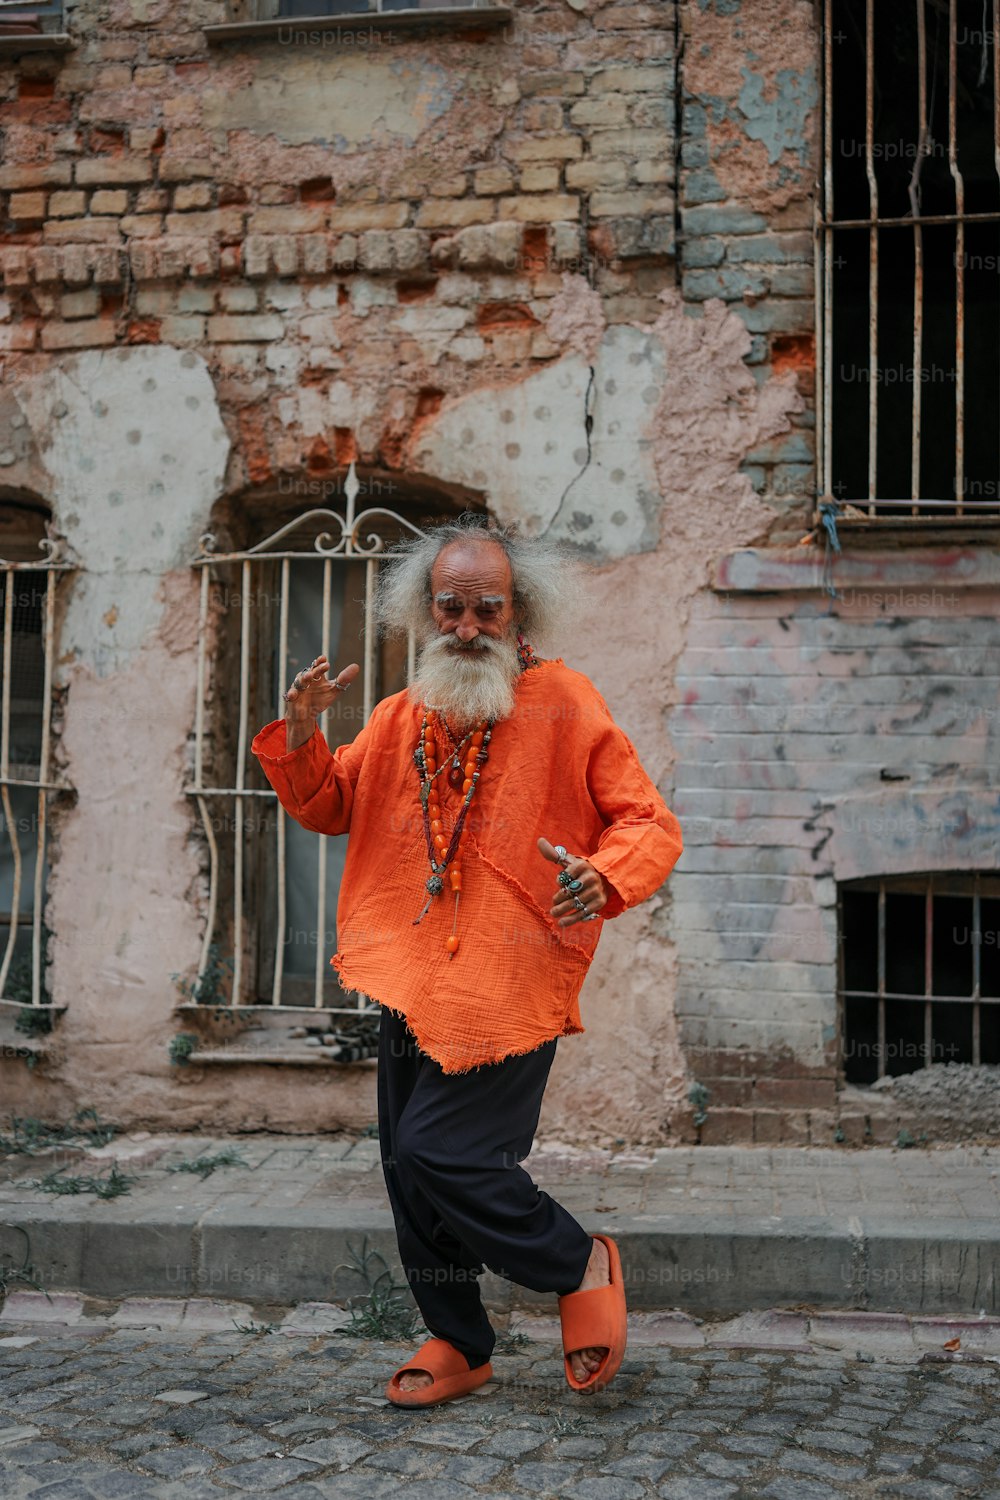 a man in an orange shirt is walking down the street